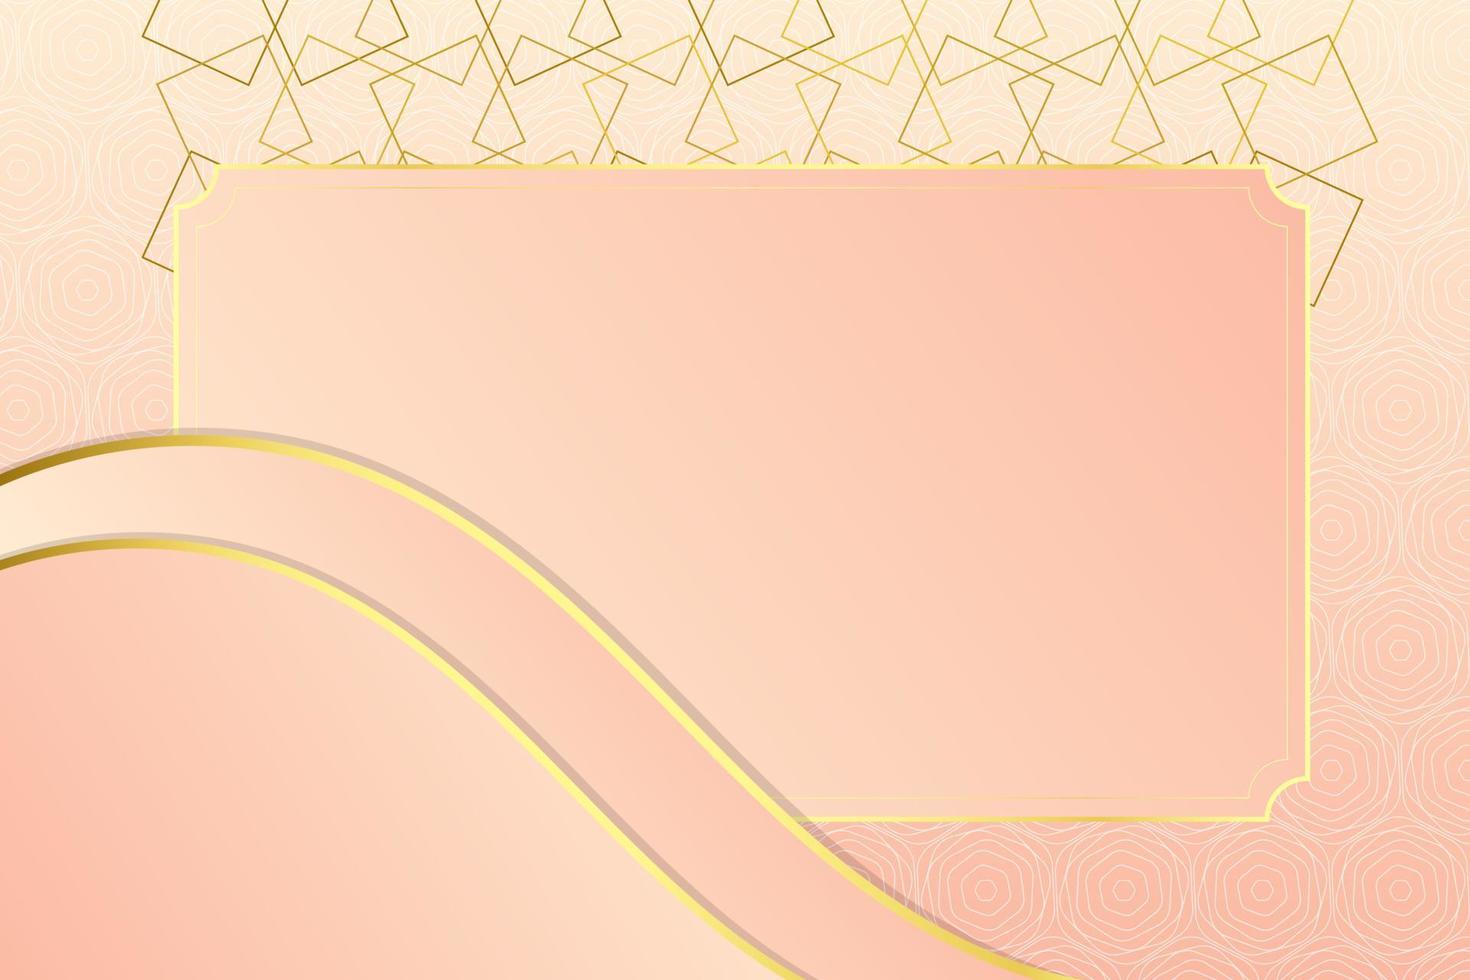 fundo abstrato de luxo moderno com elementos de linha dourada. fundo de ouro rosa moderno para design vetor